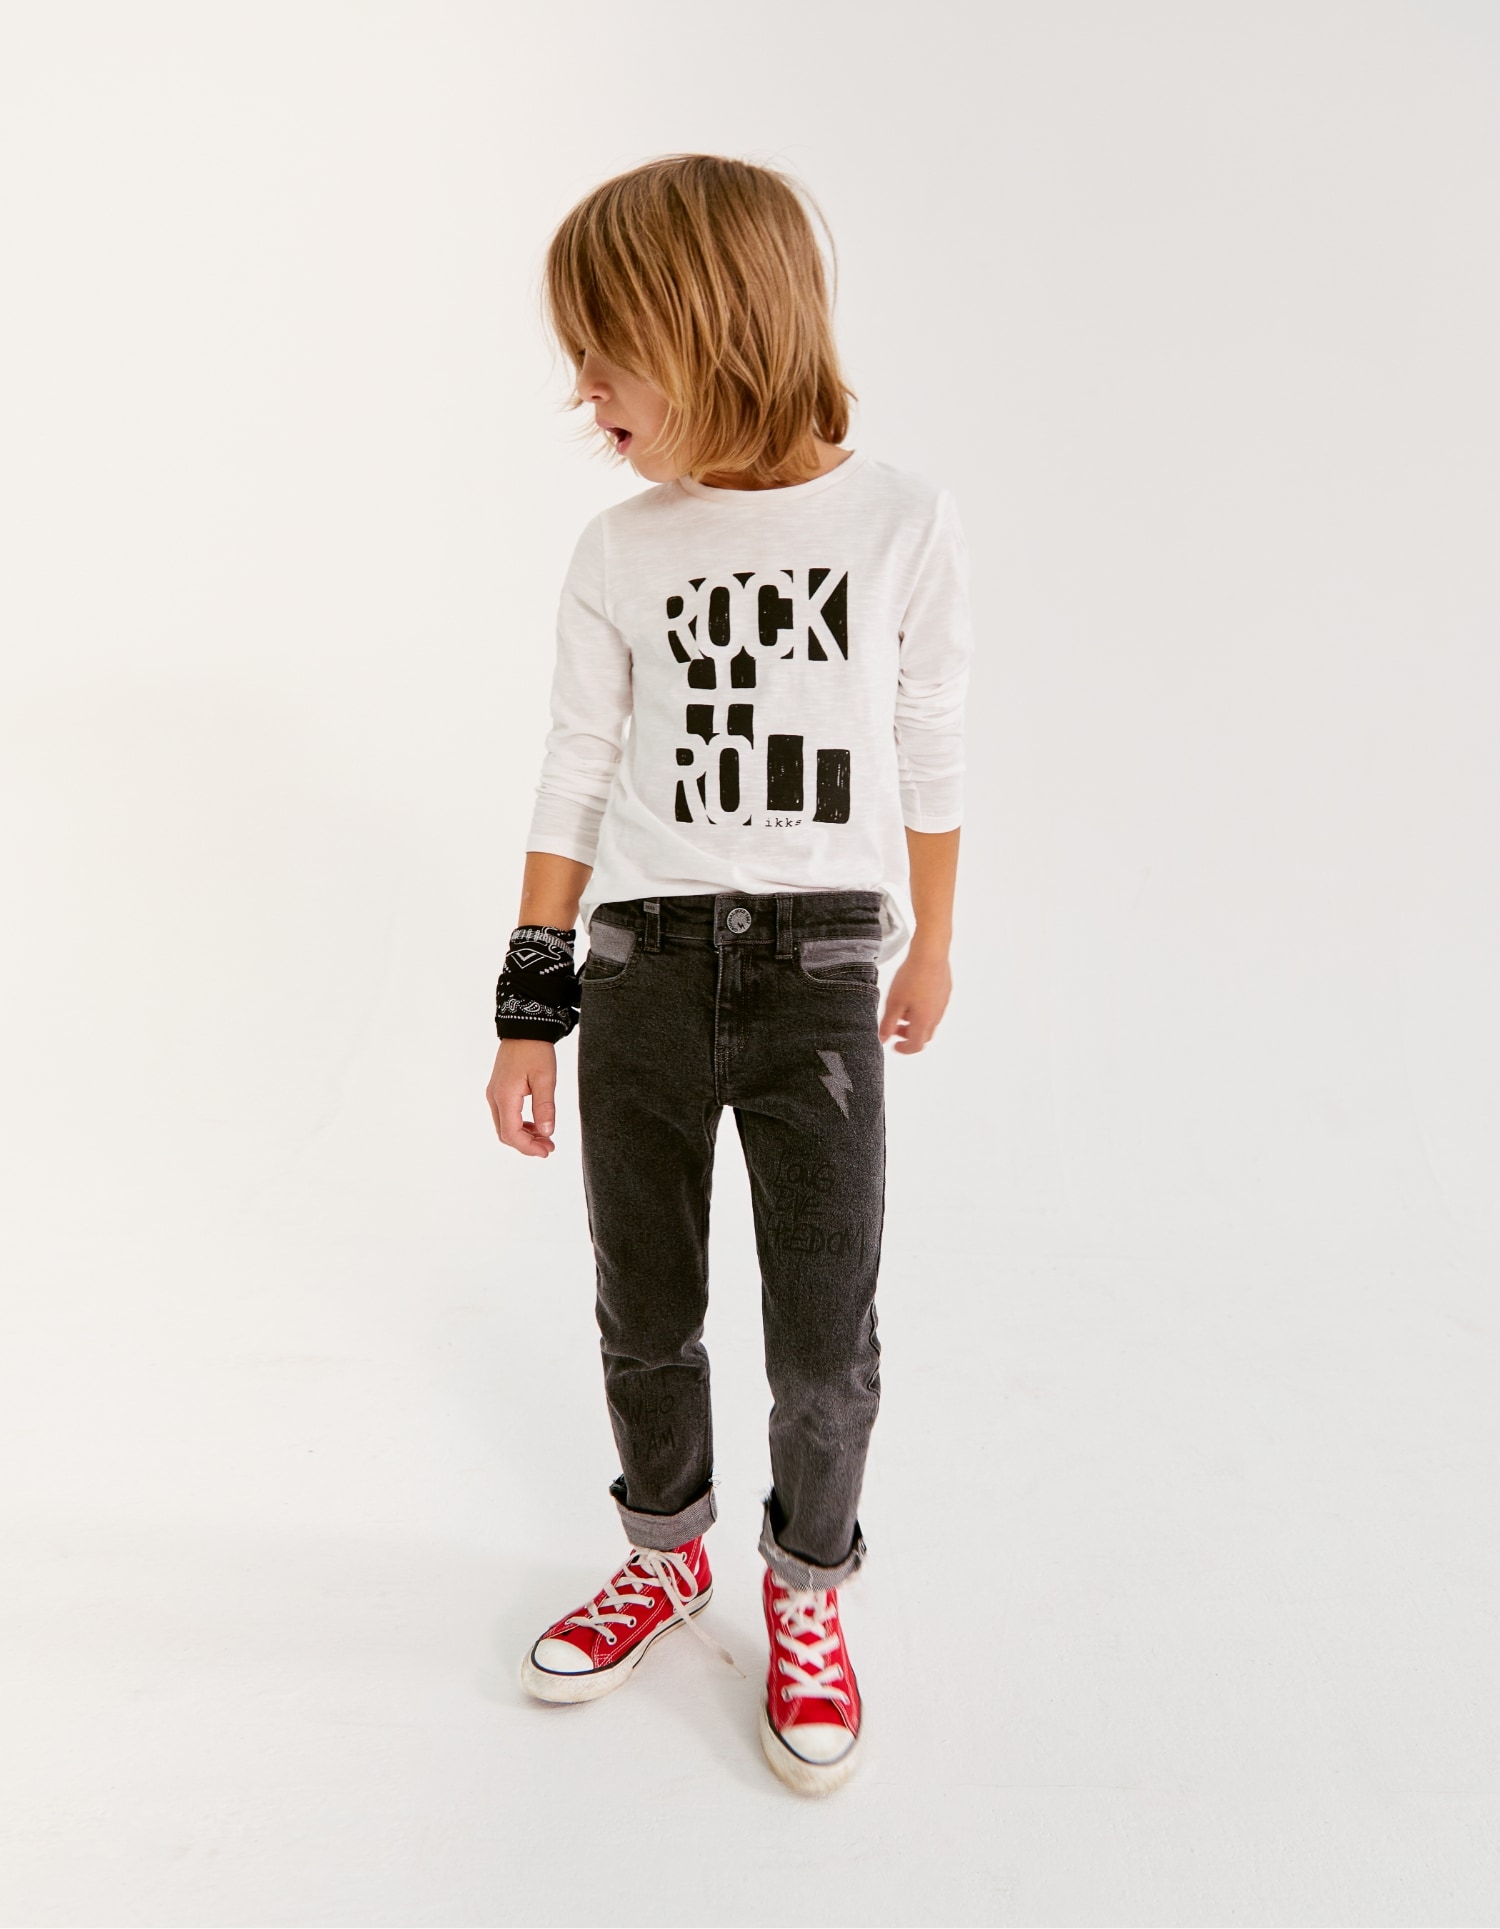 Jungen-Slim-Jeans mit Typoprint, Bio, in Black-Used-Optik 